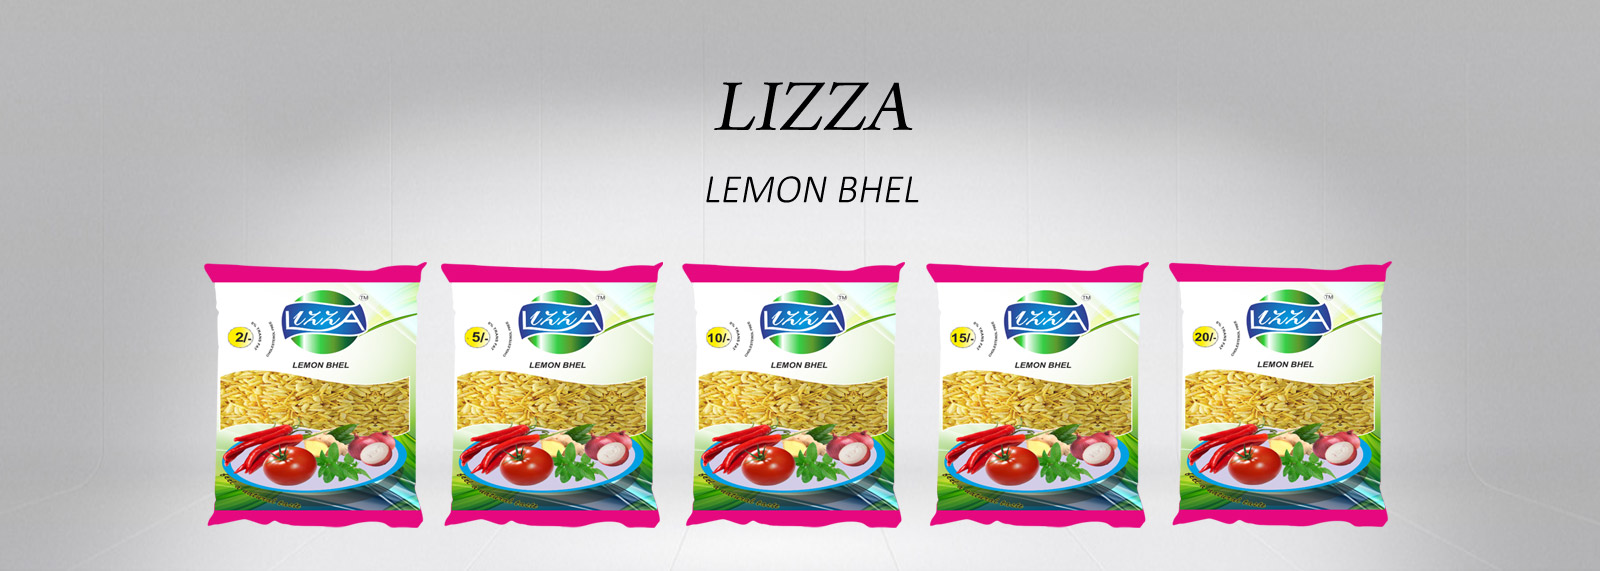 Lizza lemon bhel